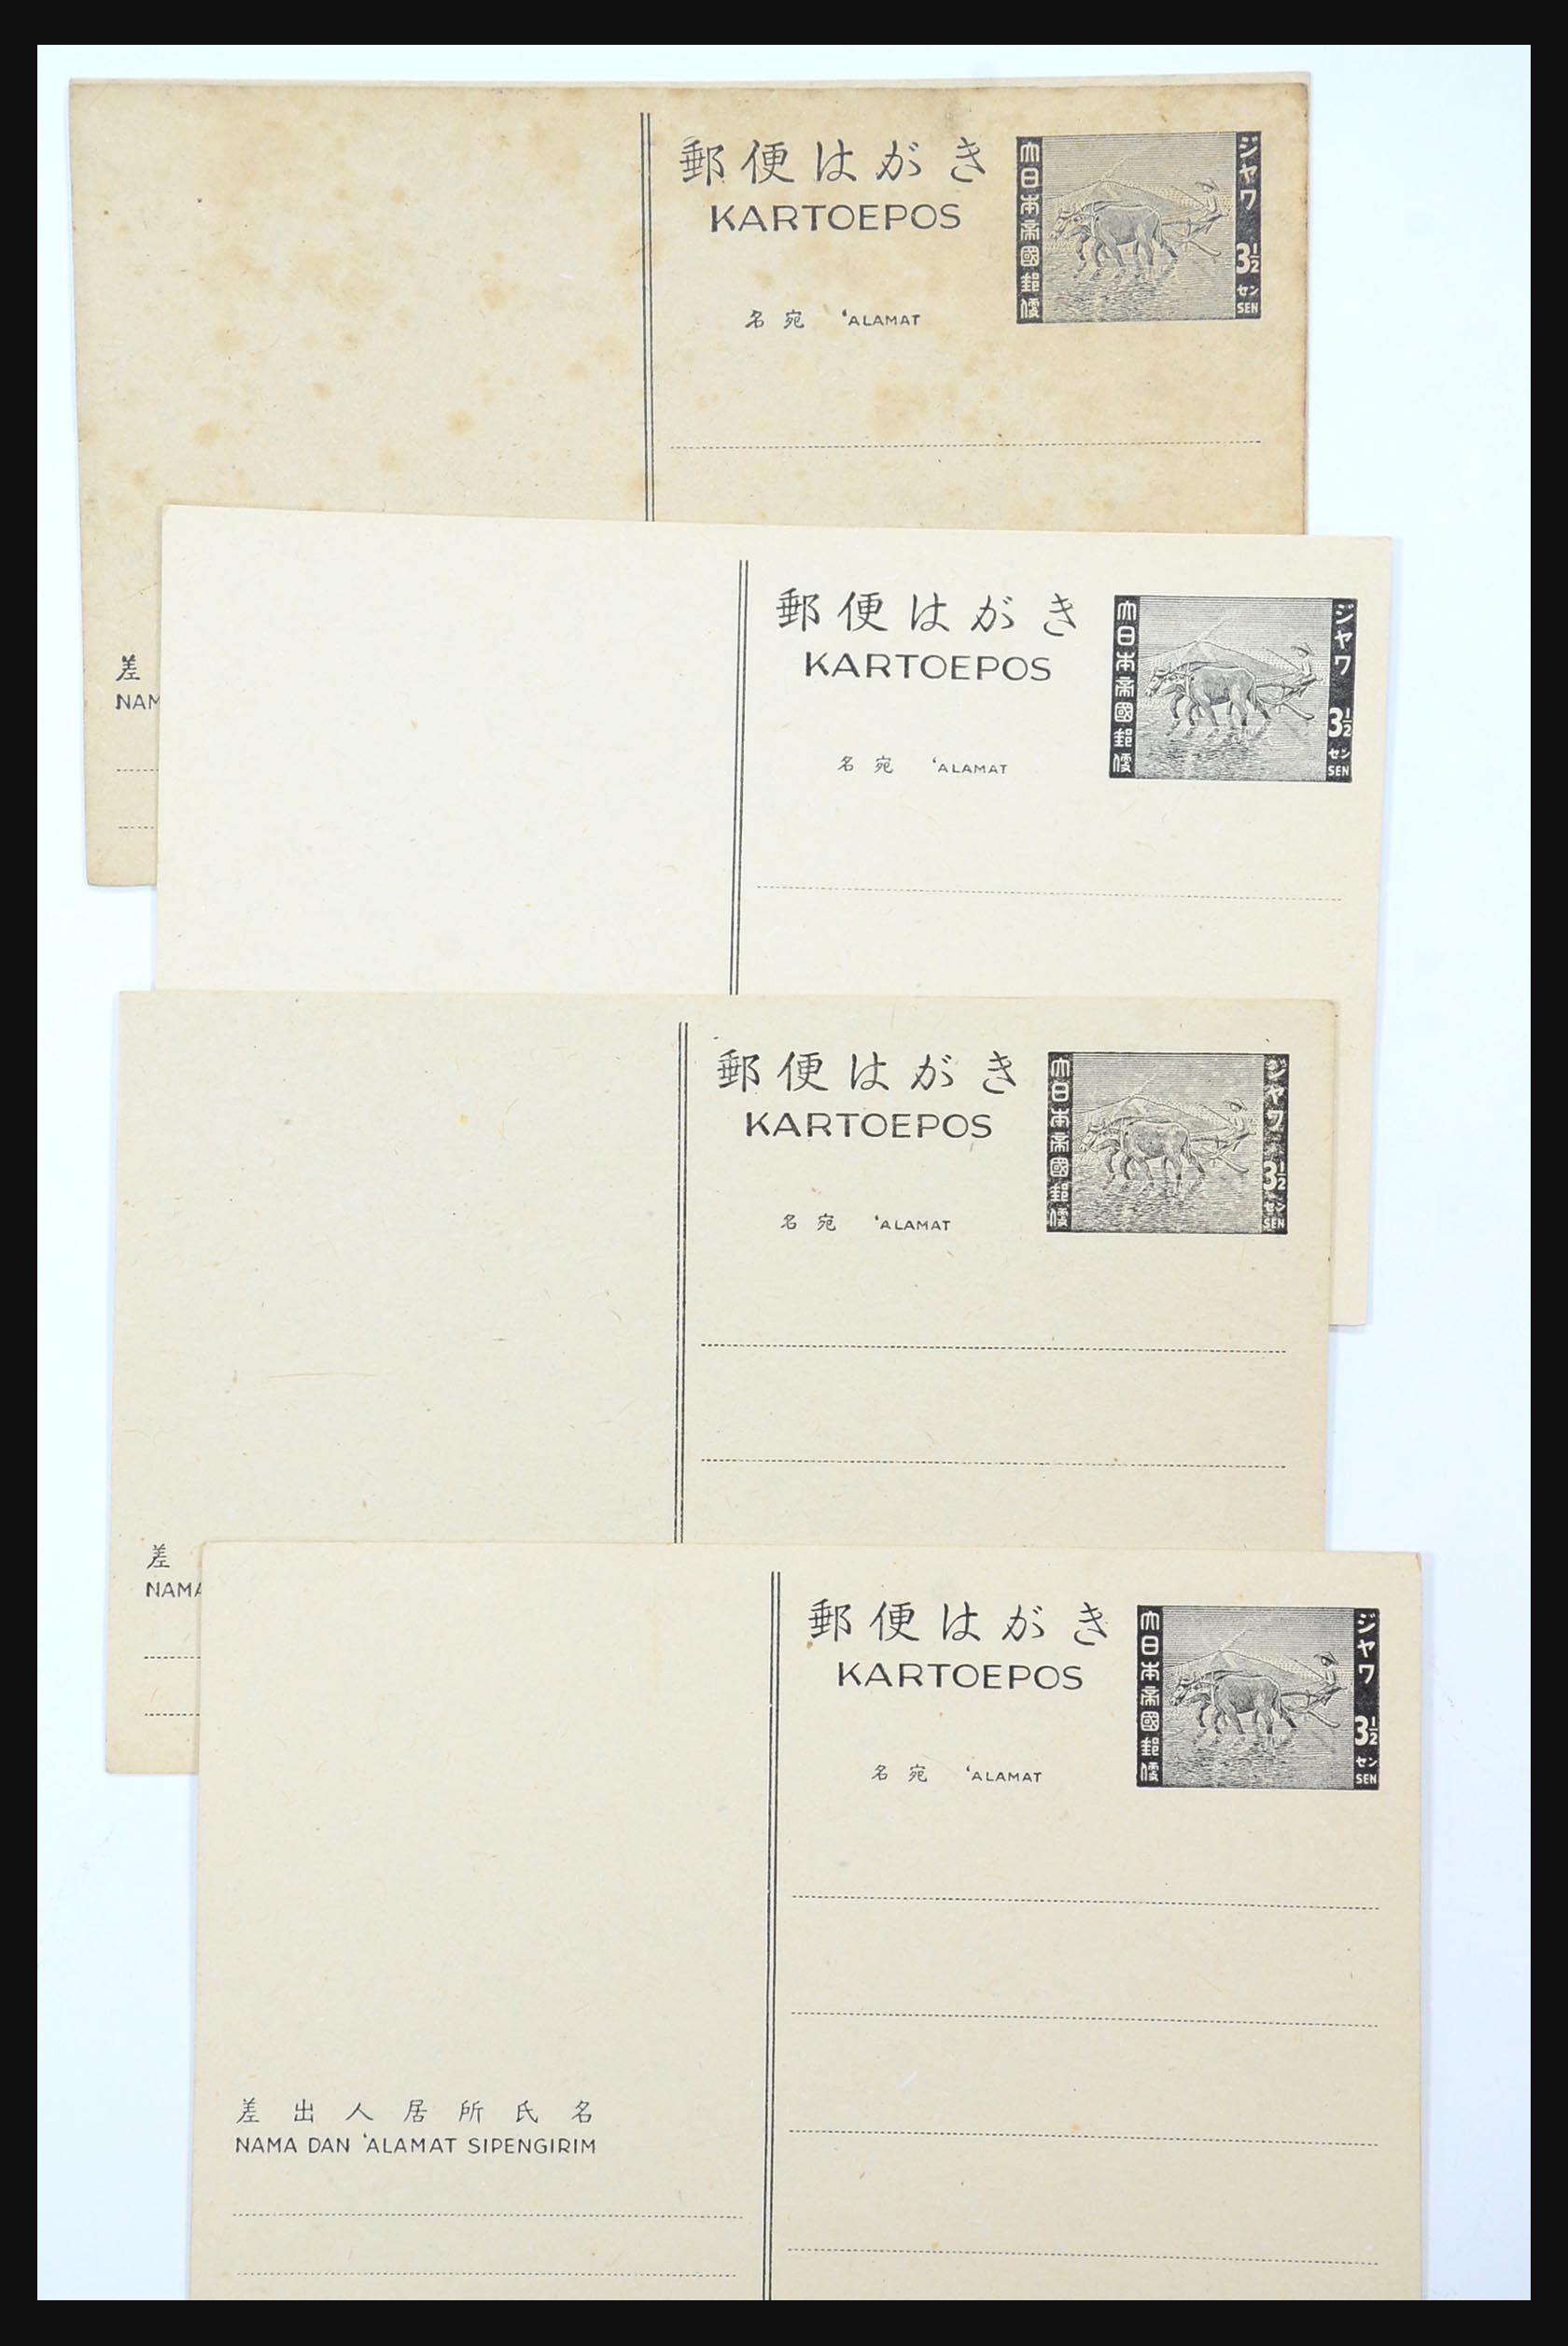 31362 077 - 31362 Nederlands Indië Japanse bezetting brieven 1942-1945.